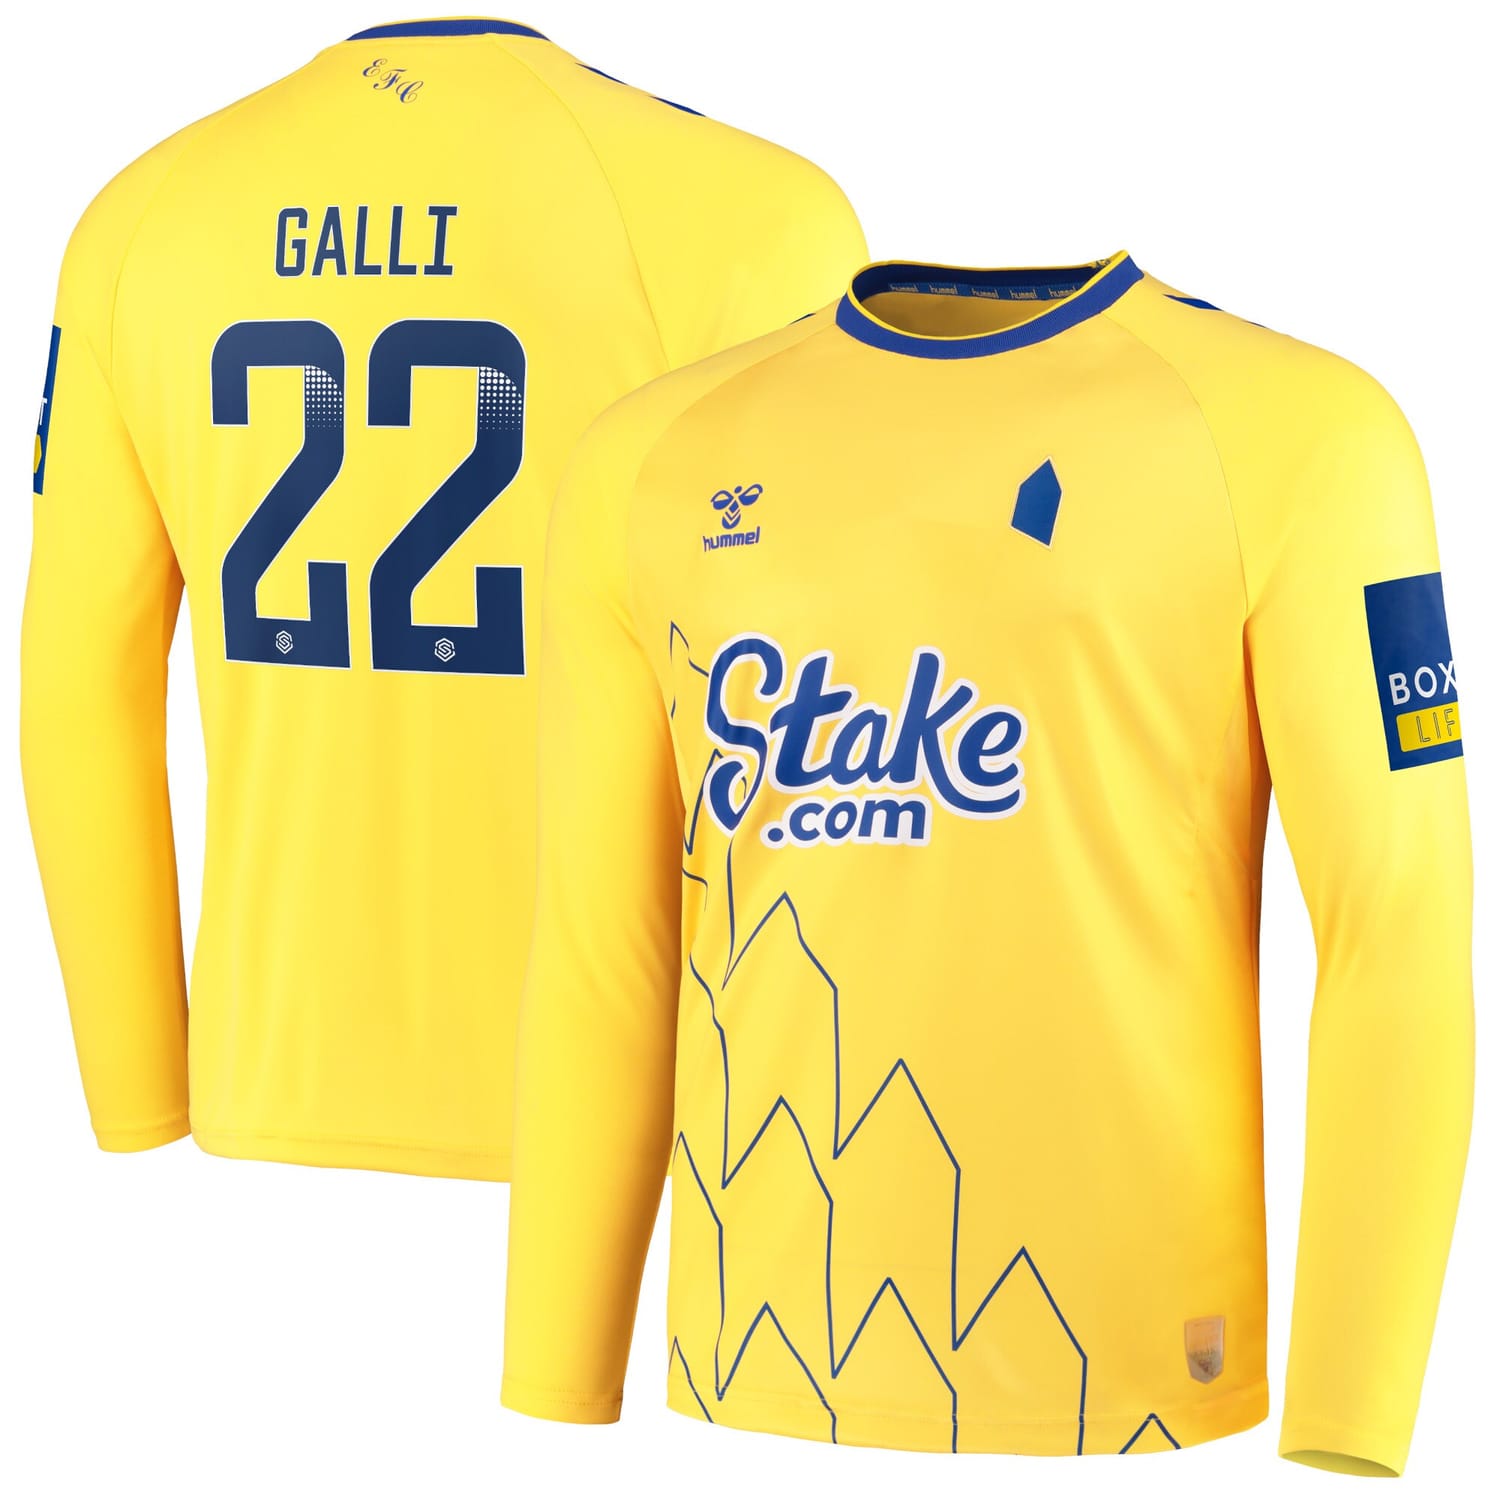 Premier League Everton Third Jersey Shirt Long Sleeve 2022-23 player Aurora Galli 22 printing for Men